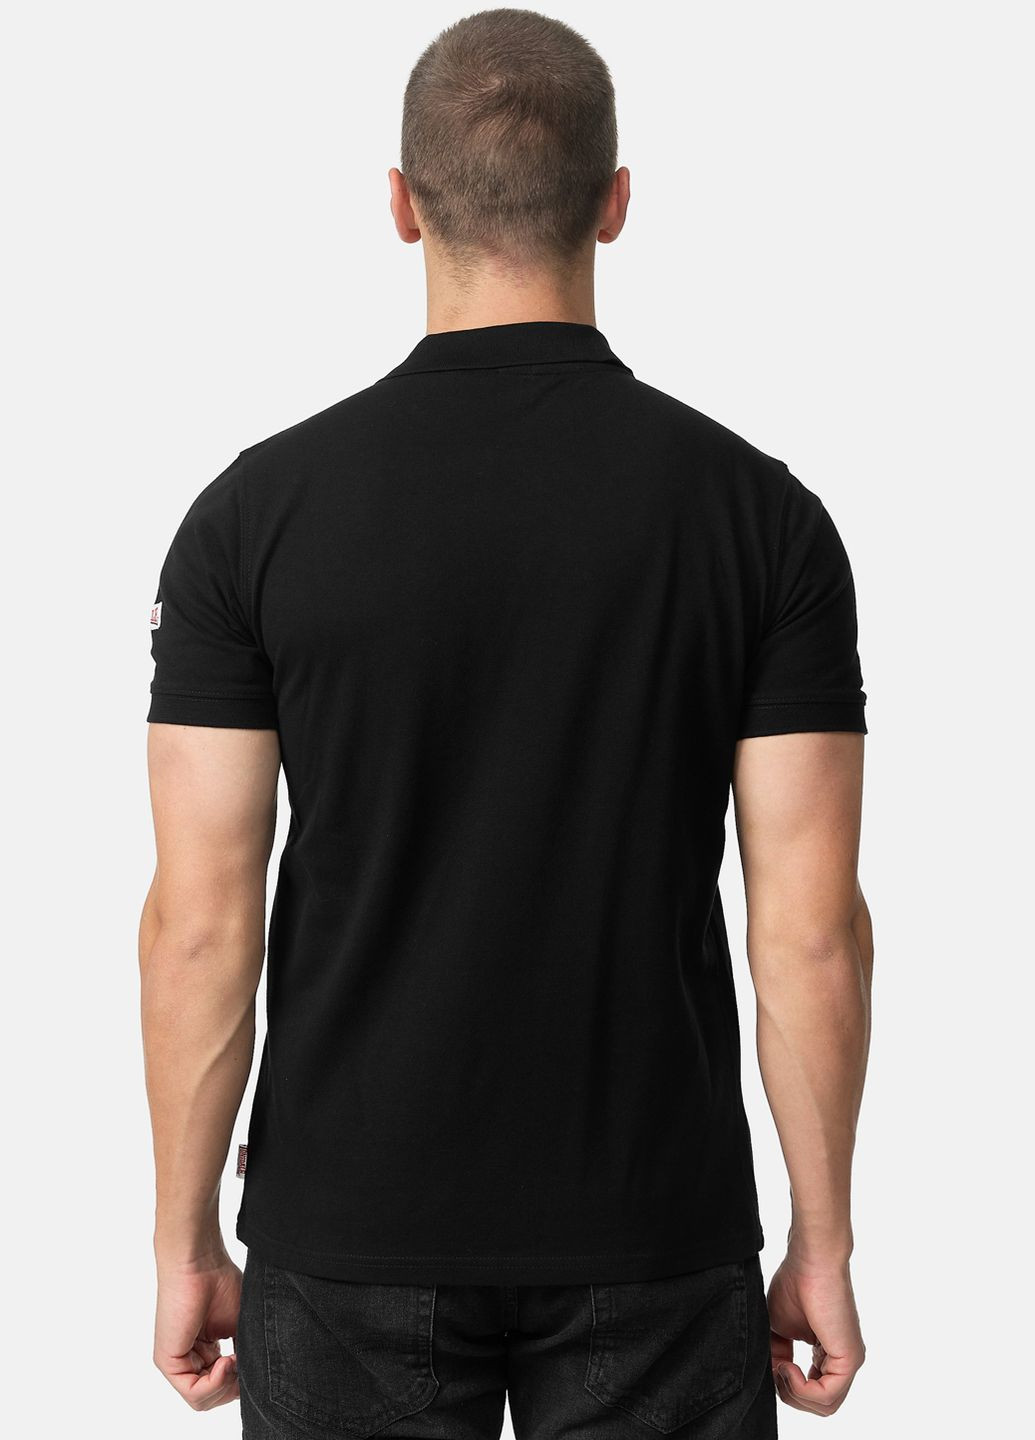 Черная футболка-поло для мужчин Lonsdale однотонная